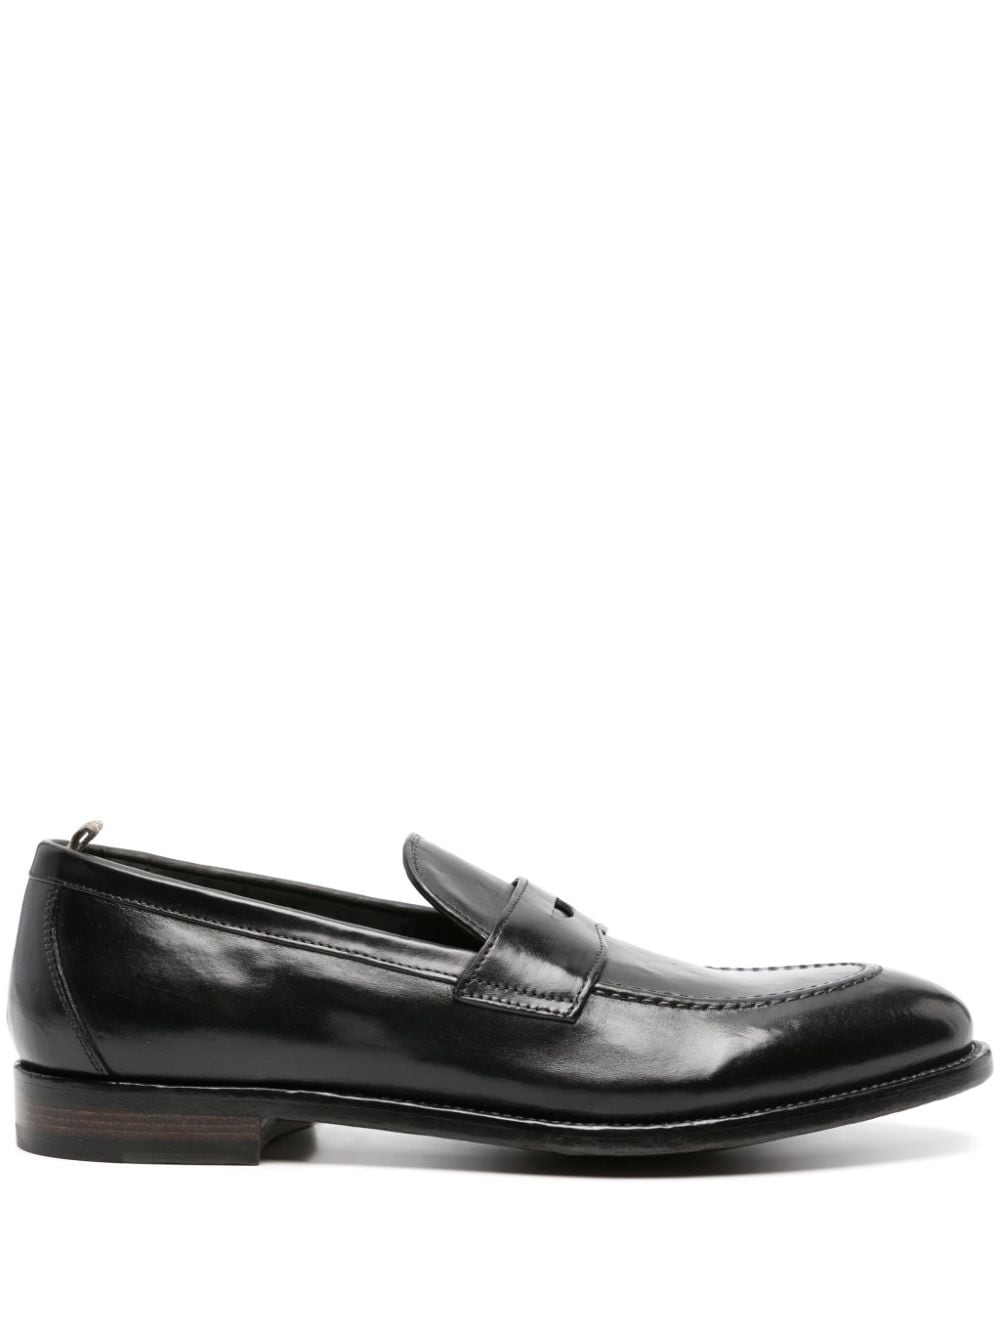 Officine Creative Tulane 003 leather penny loafers - Black von Officine Creative